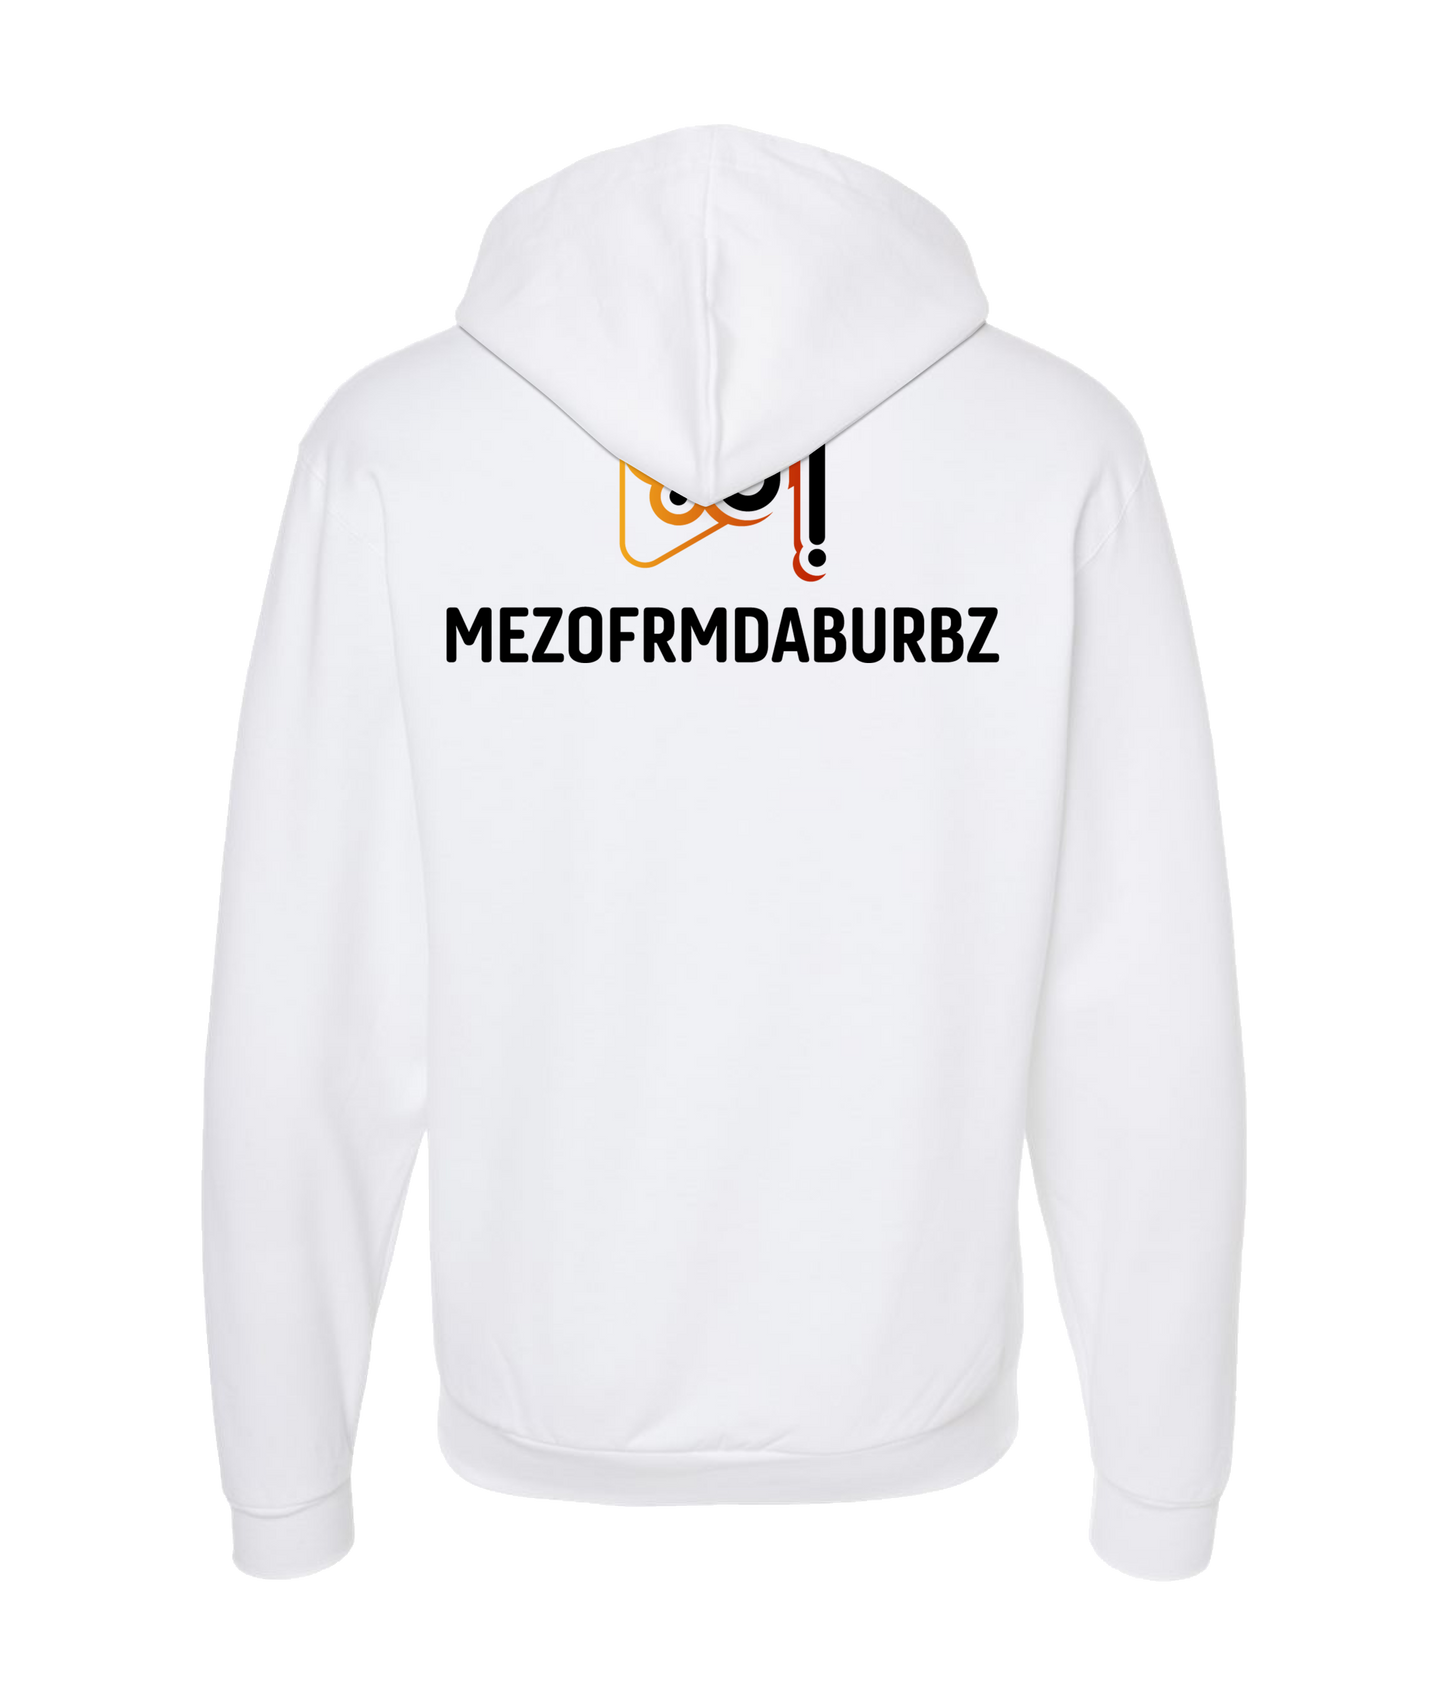 Mezofrmdaburbz - BURBZ - White Zip Up Hoodie